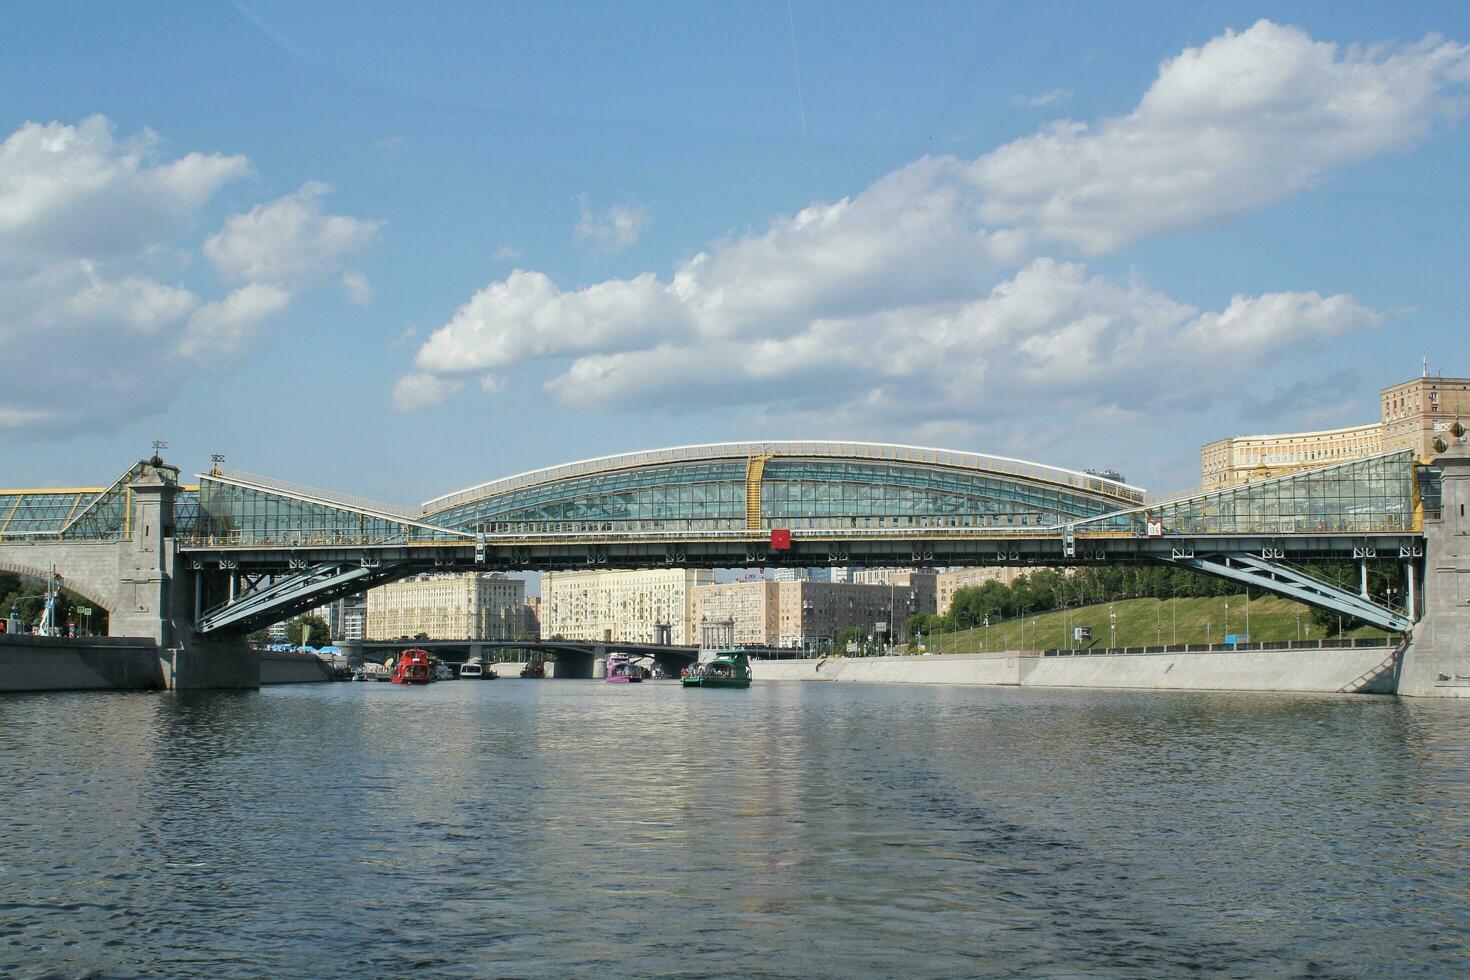 andreevskiy andreevsky brug aan de overkant de Moskou rivier- Bij zomer dag. boog van pushkinskiy pushkinsky voetganger brug. Moskou, Rusland - juni 22, 2023 foto